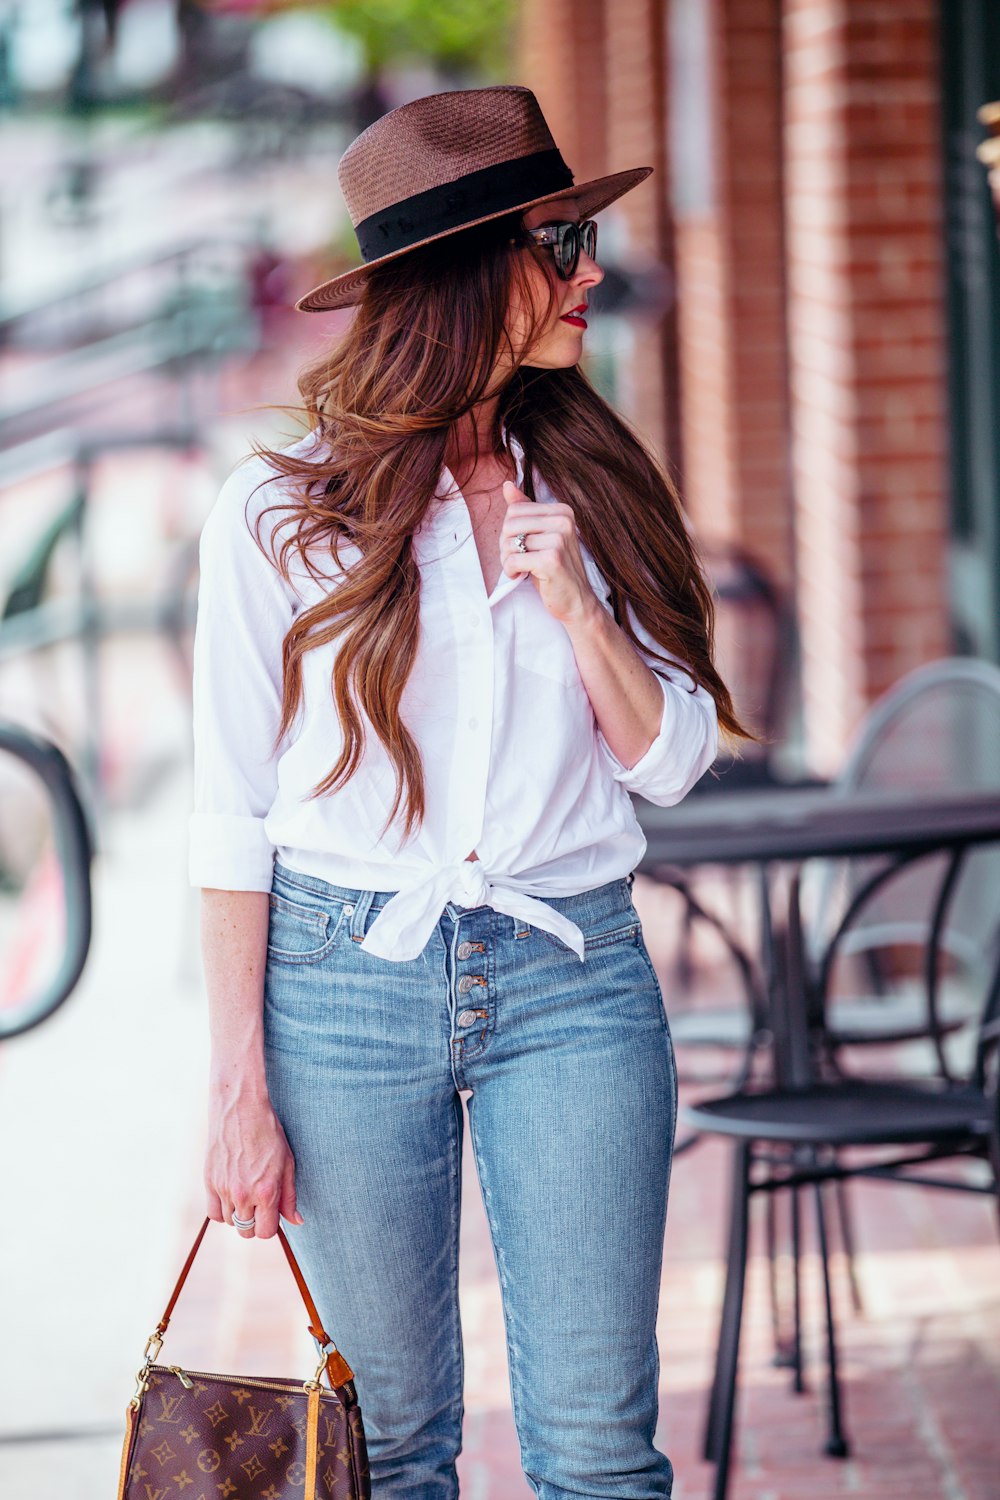 women's white dress shirt and blue jeans photo – Free Image on Unsplash